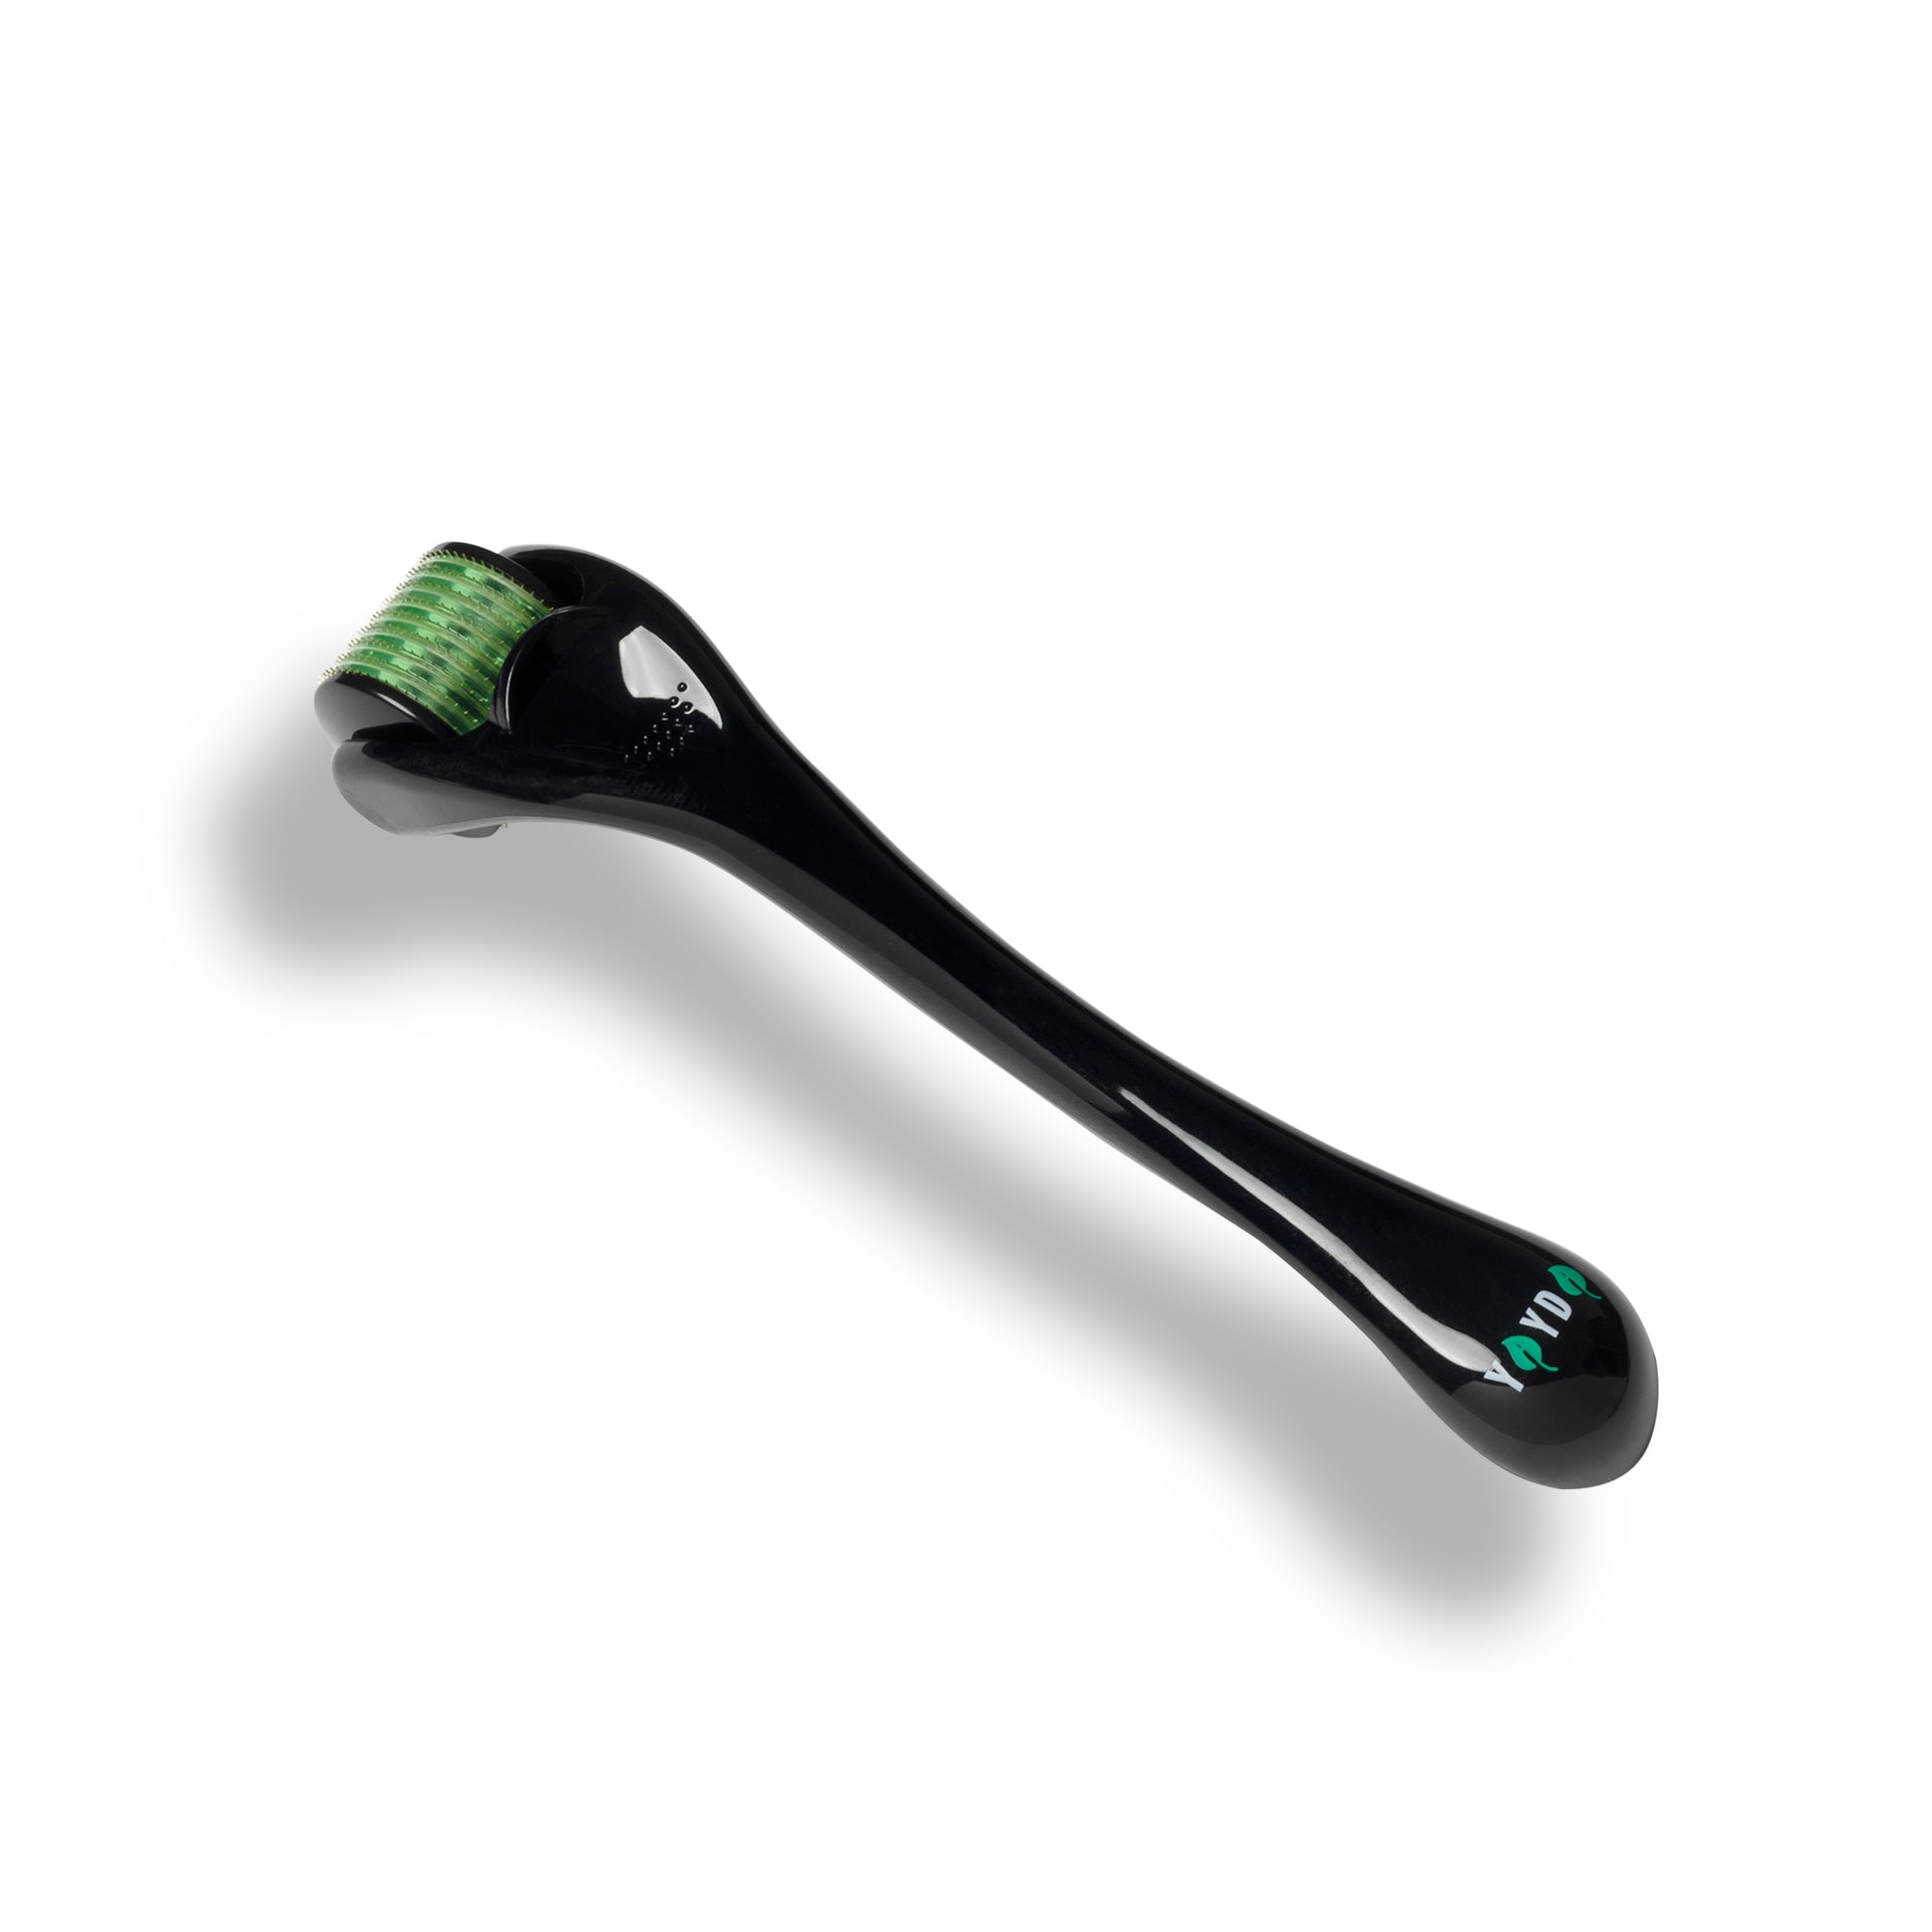 Black derma roller with green roller